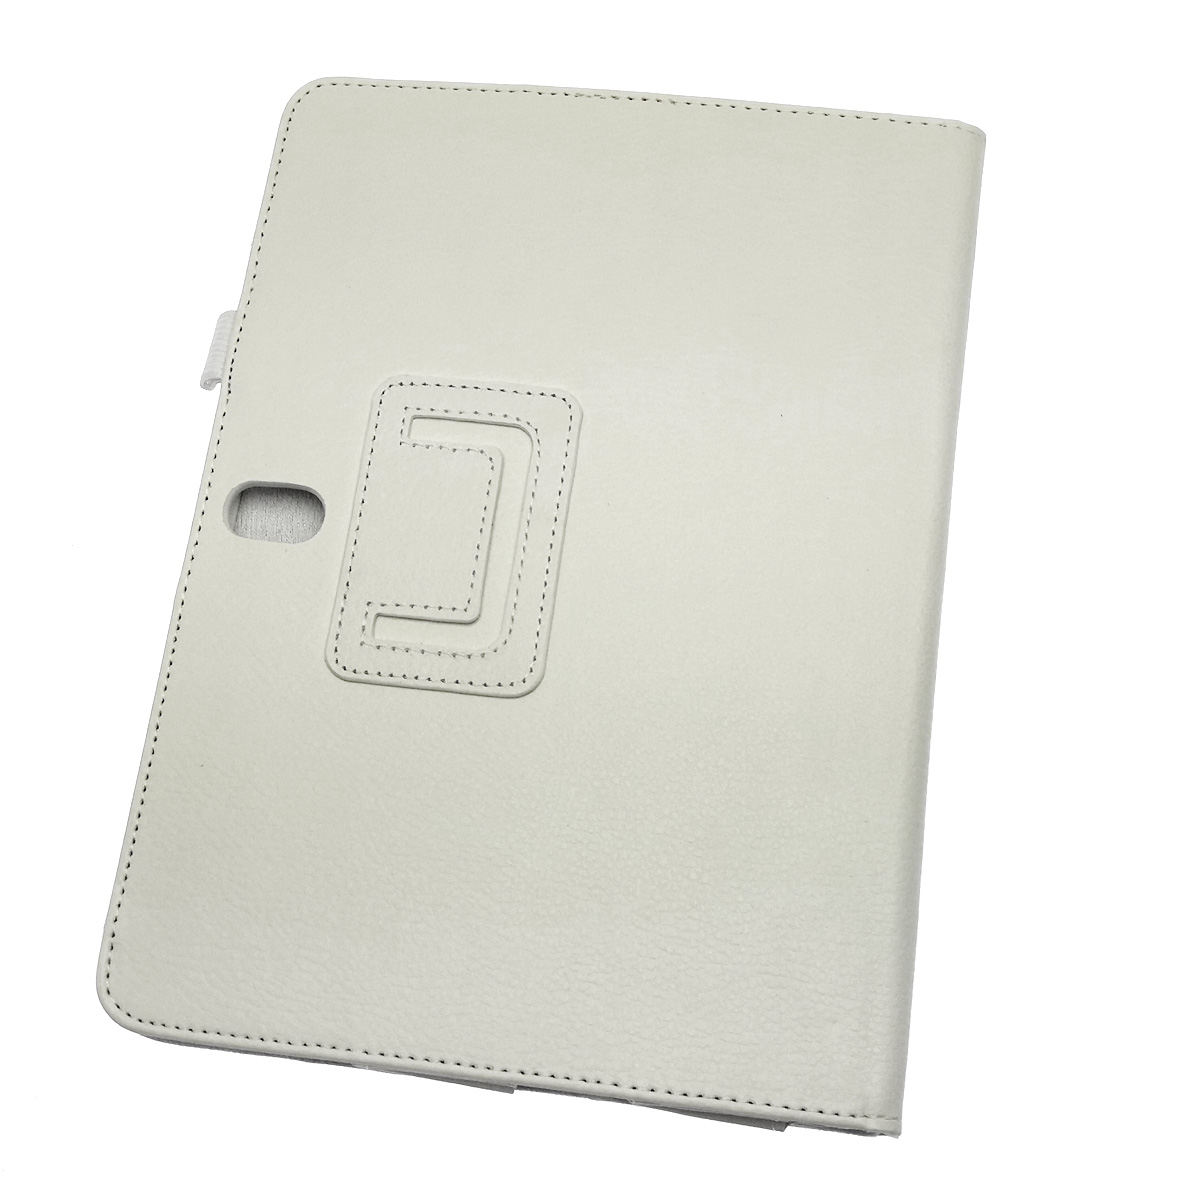 Чехол книжка для SAMSUNG Galaxy Note 10.1 (SM-N8000), экокожа, цвет белый.